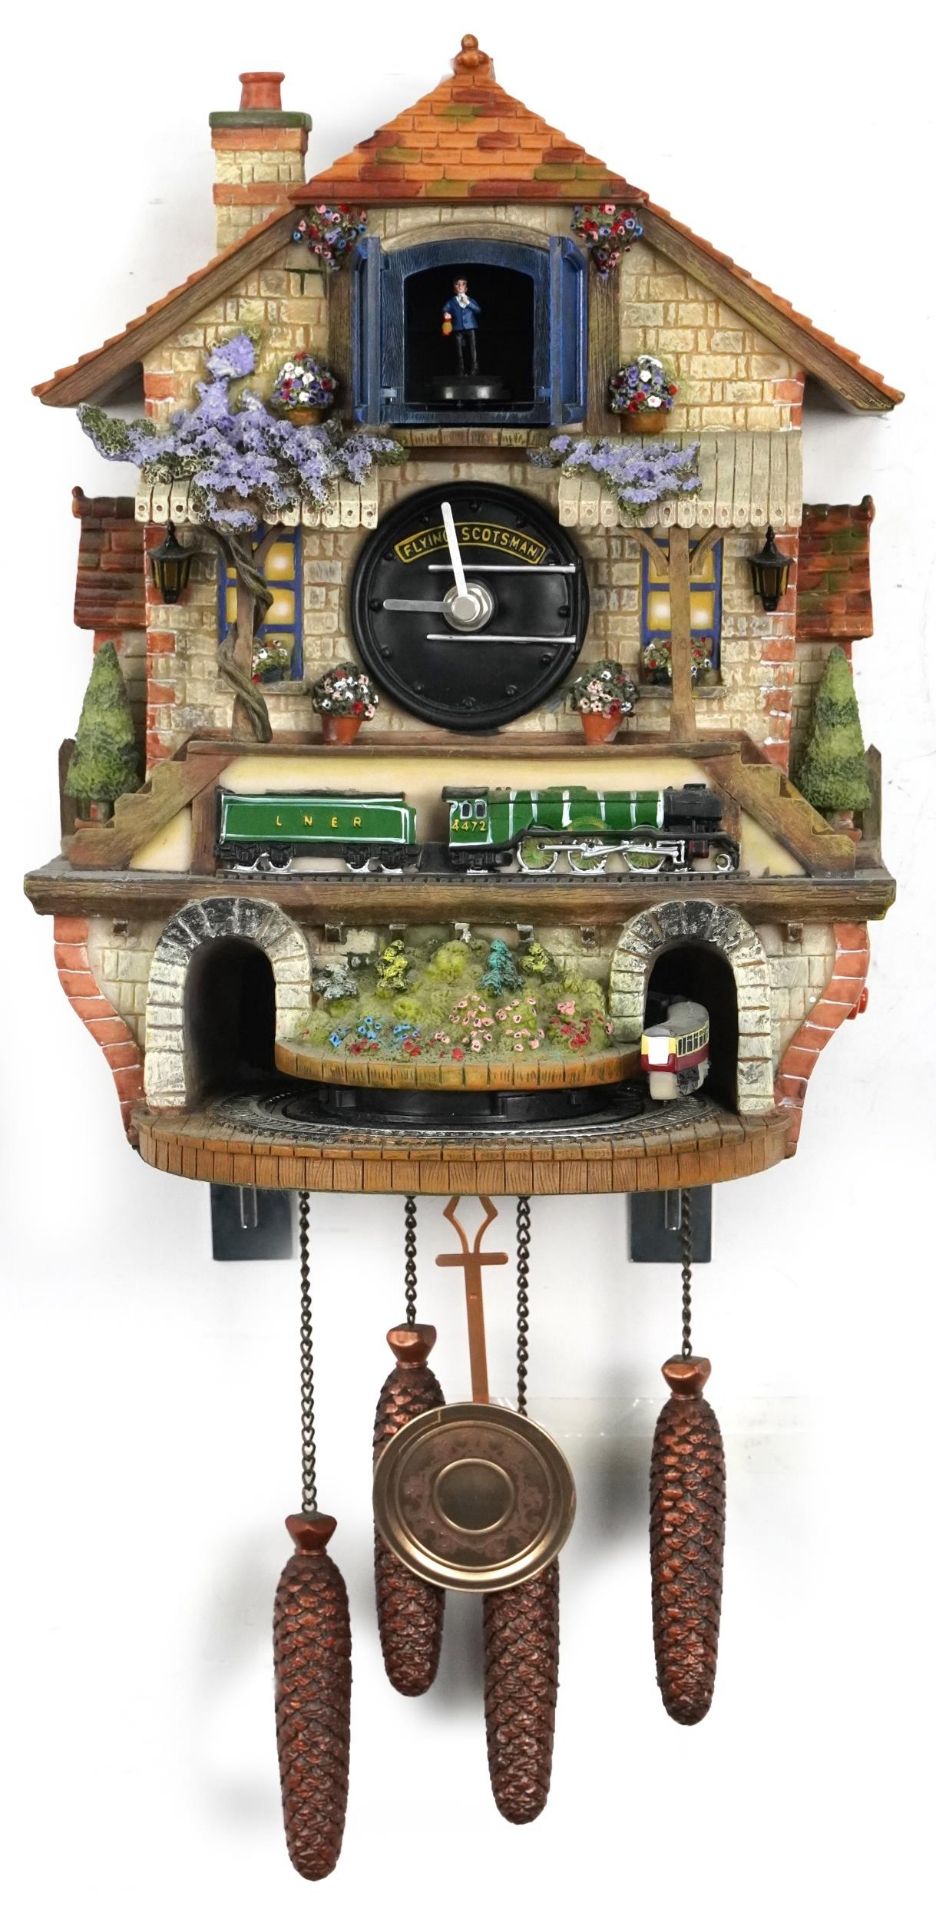 Bradford Edition Memories of Steam Flying Scotsman cuckoo clock, 31.5cm high